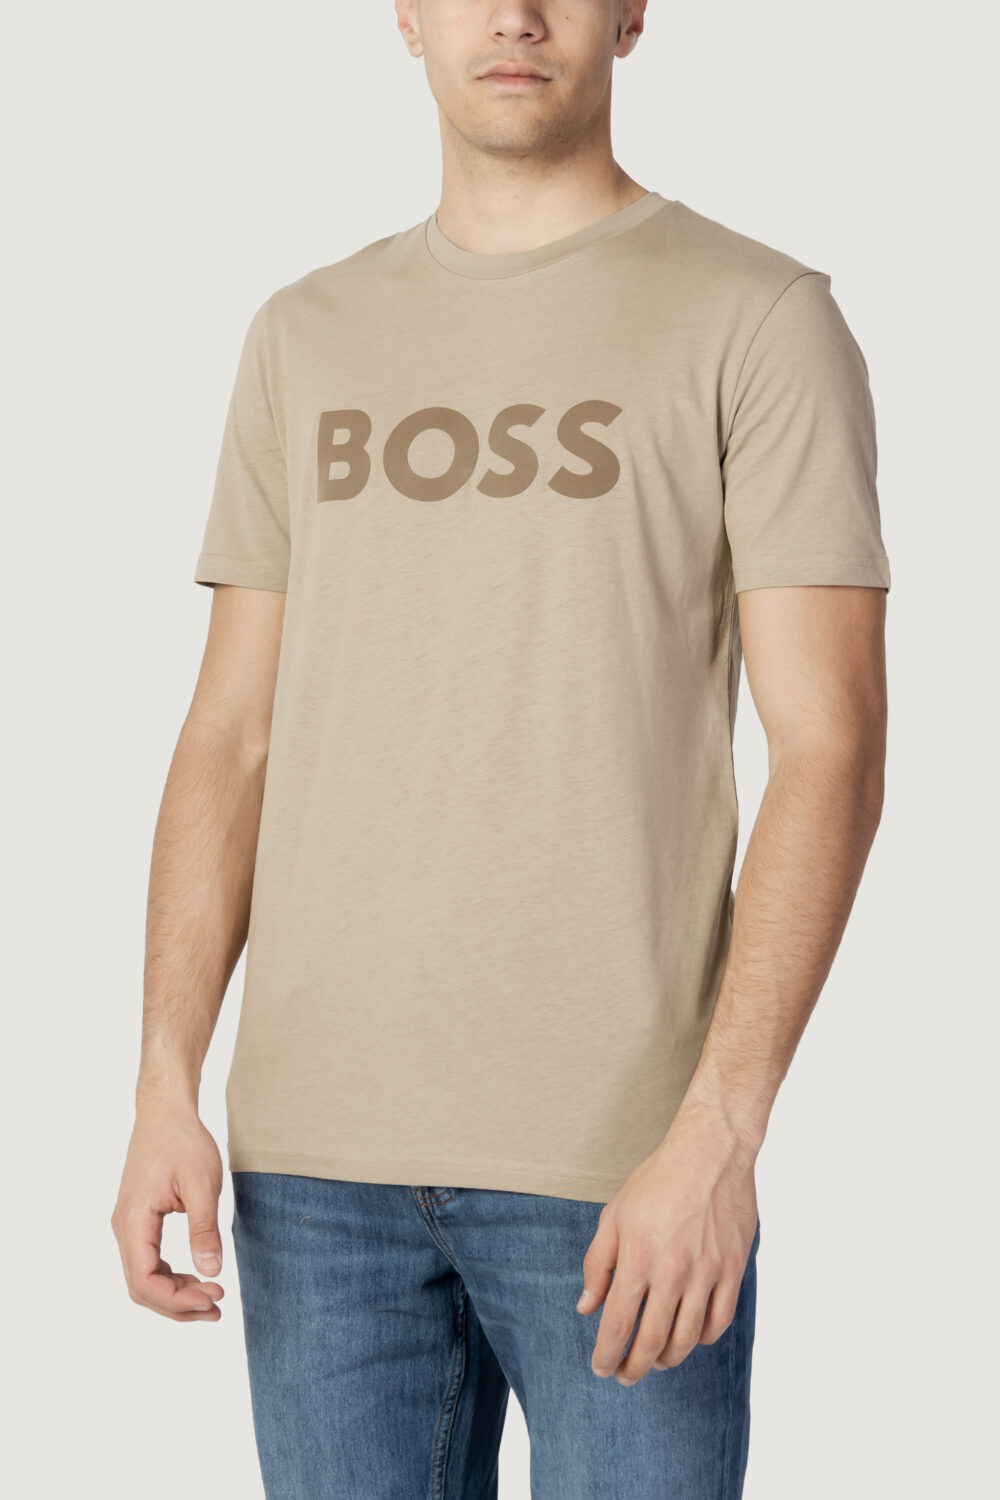 T-shirt Boss jersey thinking 1 Beige scuro - Foto 1